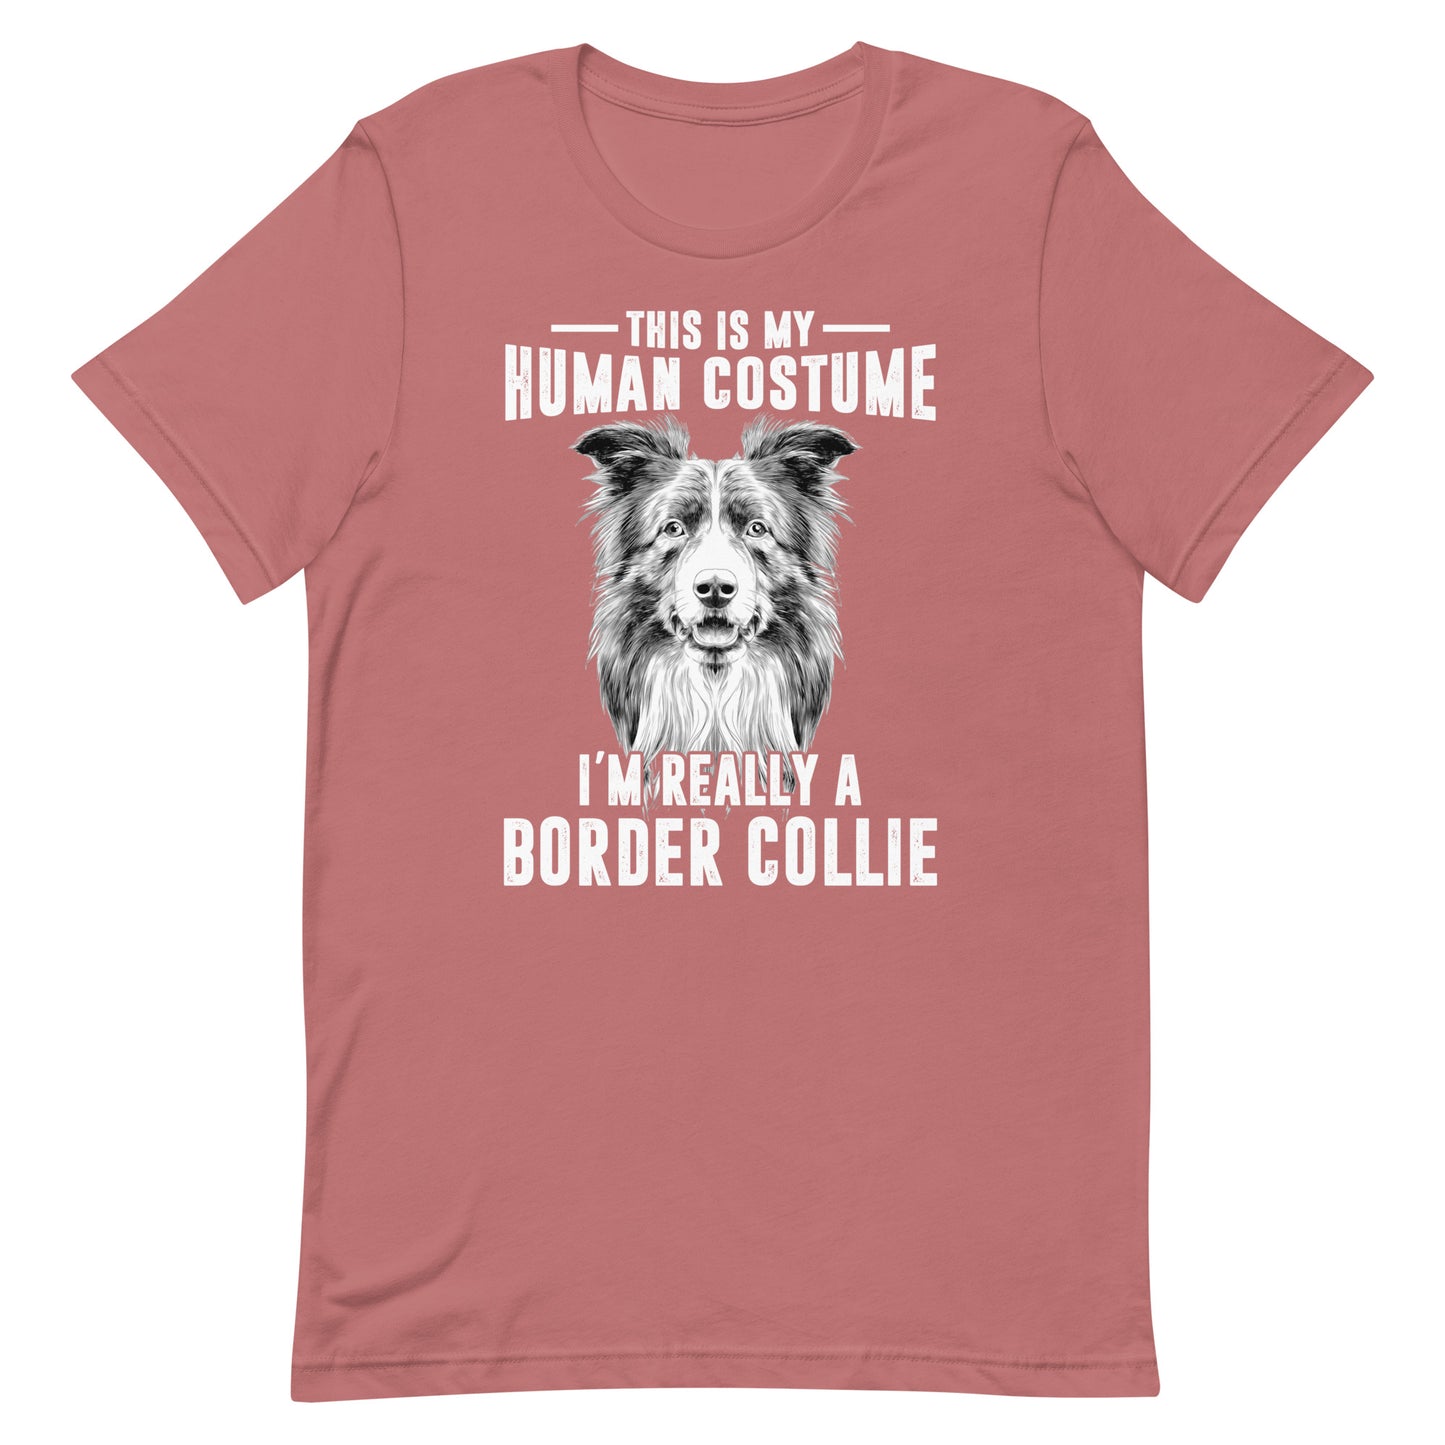 I'm really a Border Collie T-Shirt